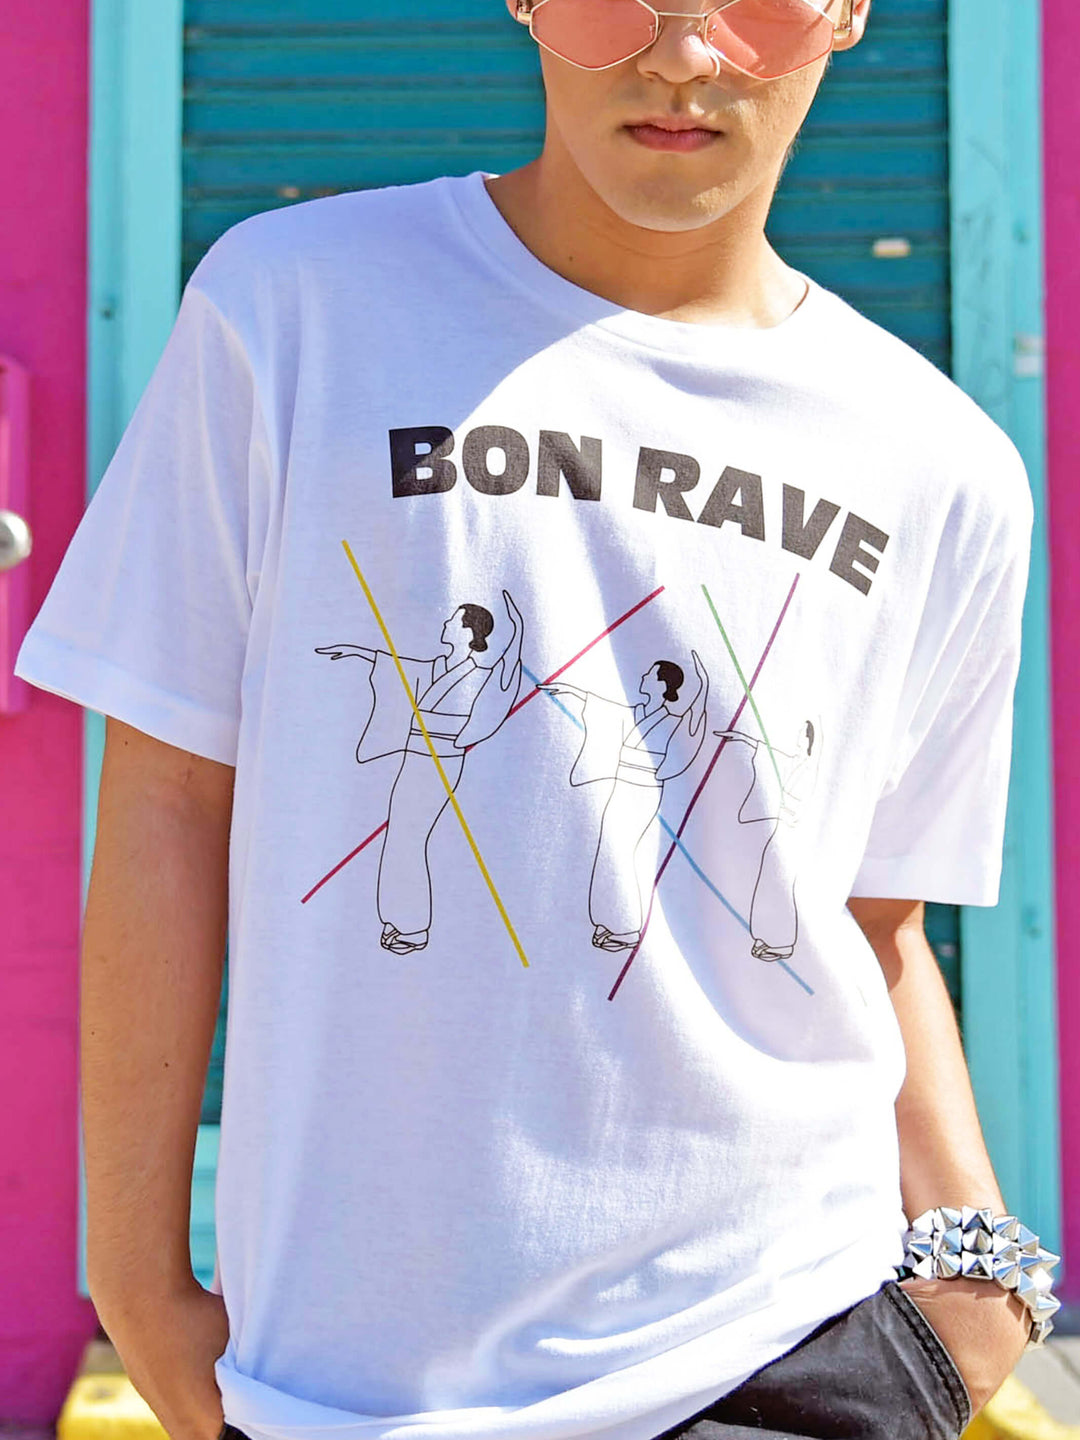 Bon Rave white graphic t-shirt.